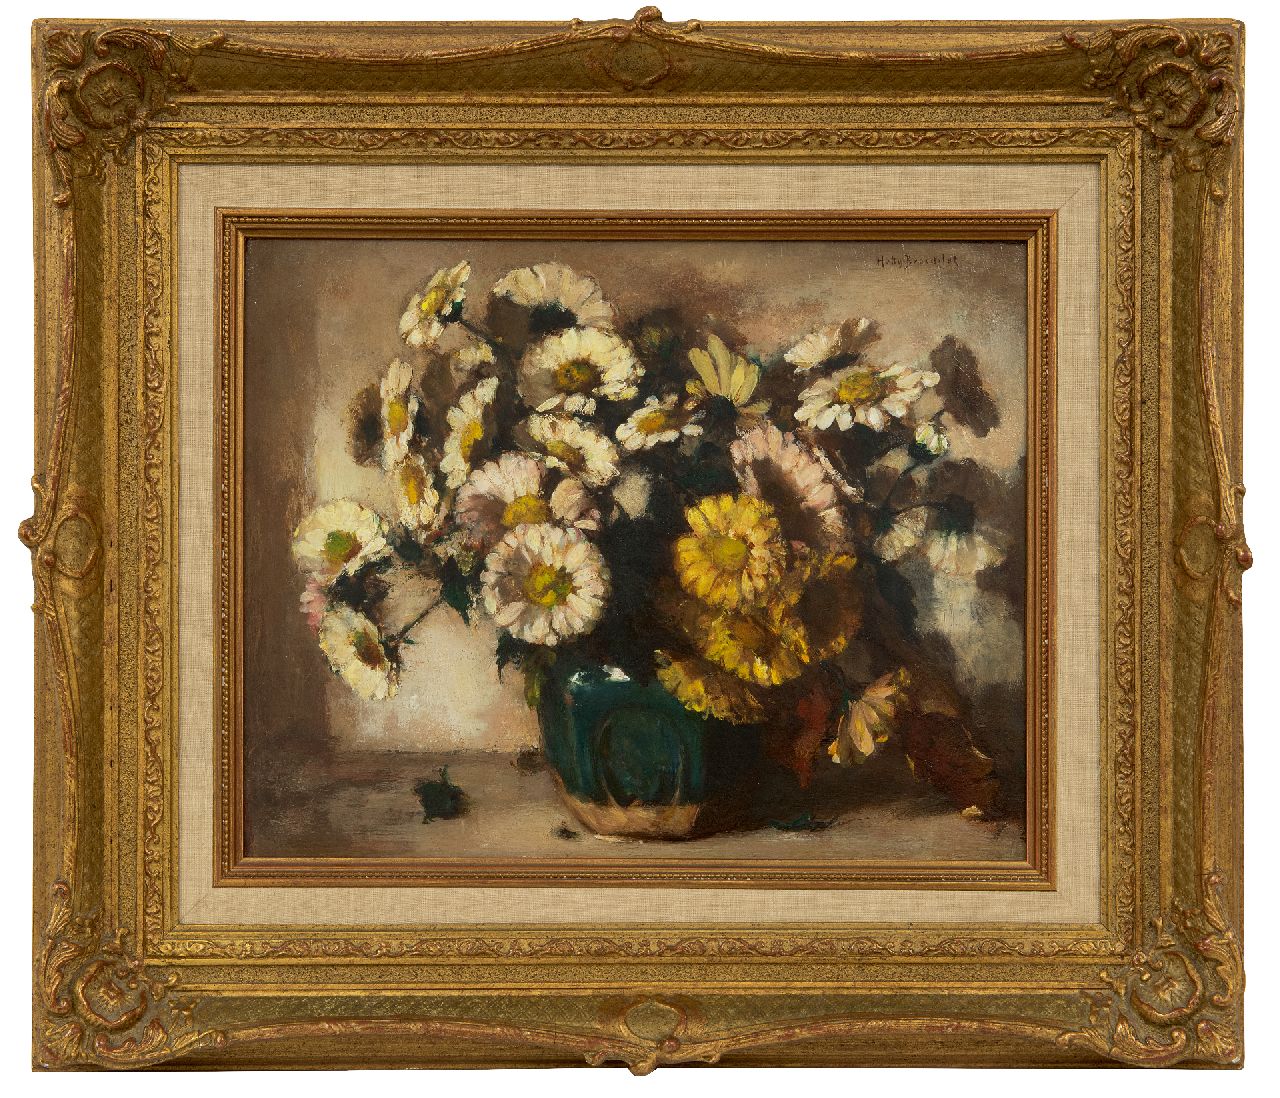 Broedelet-Henkes H.  | Hester 'Hetty' Broedelet-Henkes, Daisies in a ginger jar, oil on panel 27.8 x 35.1 cm, signed u.r.